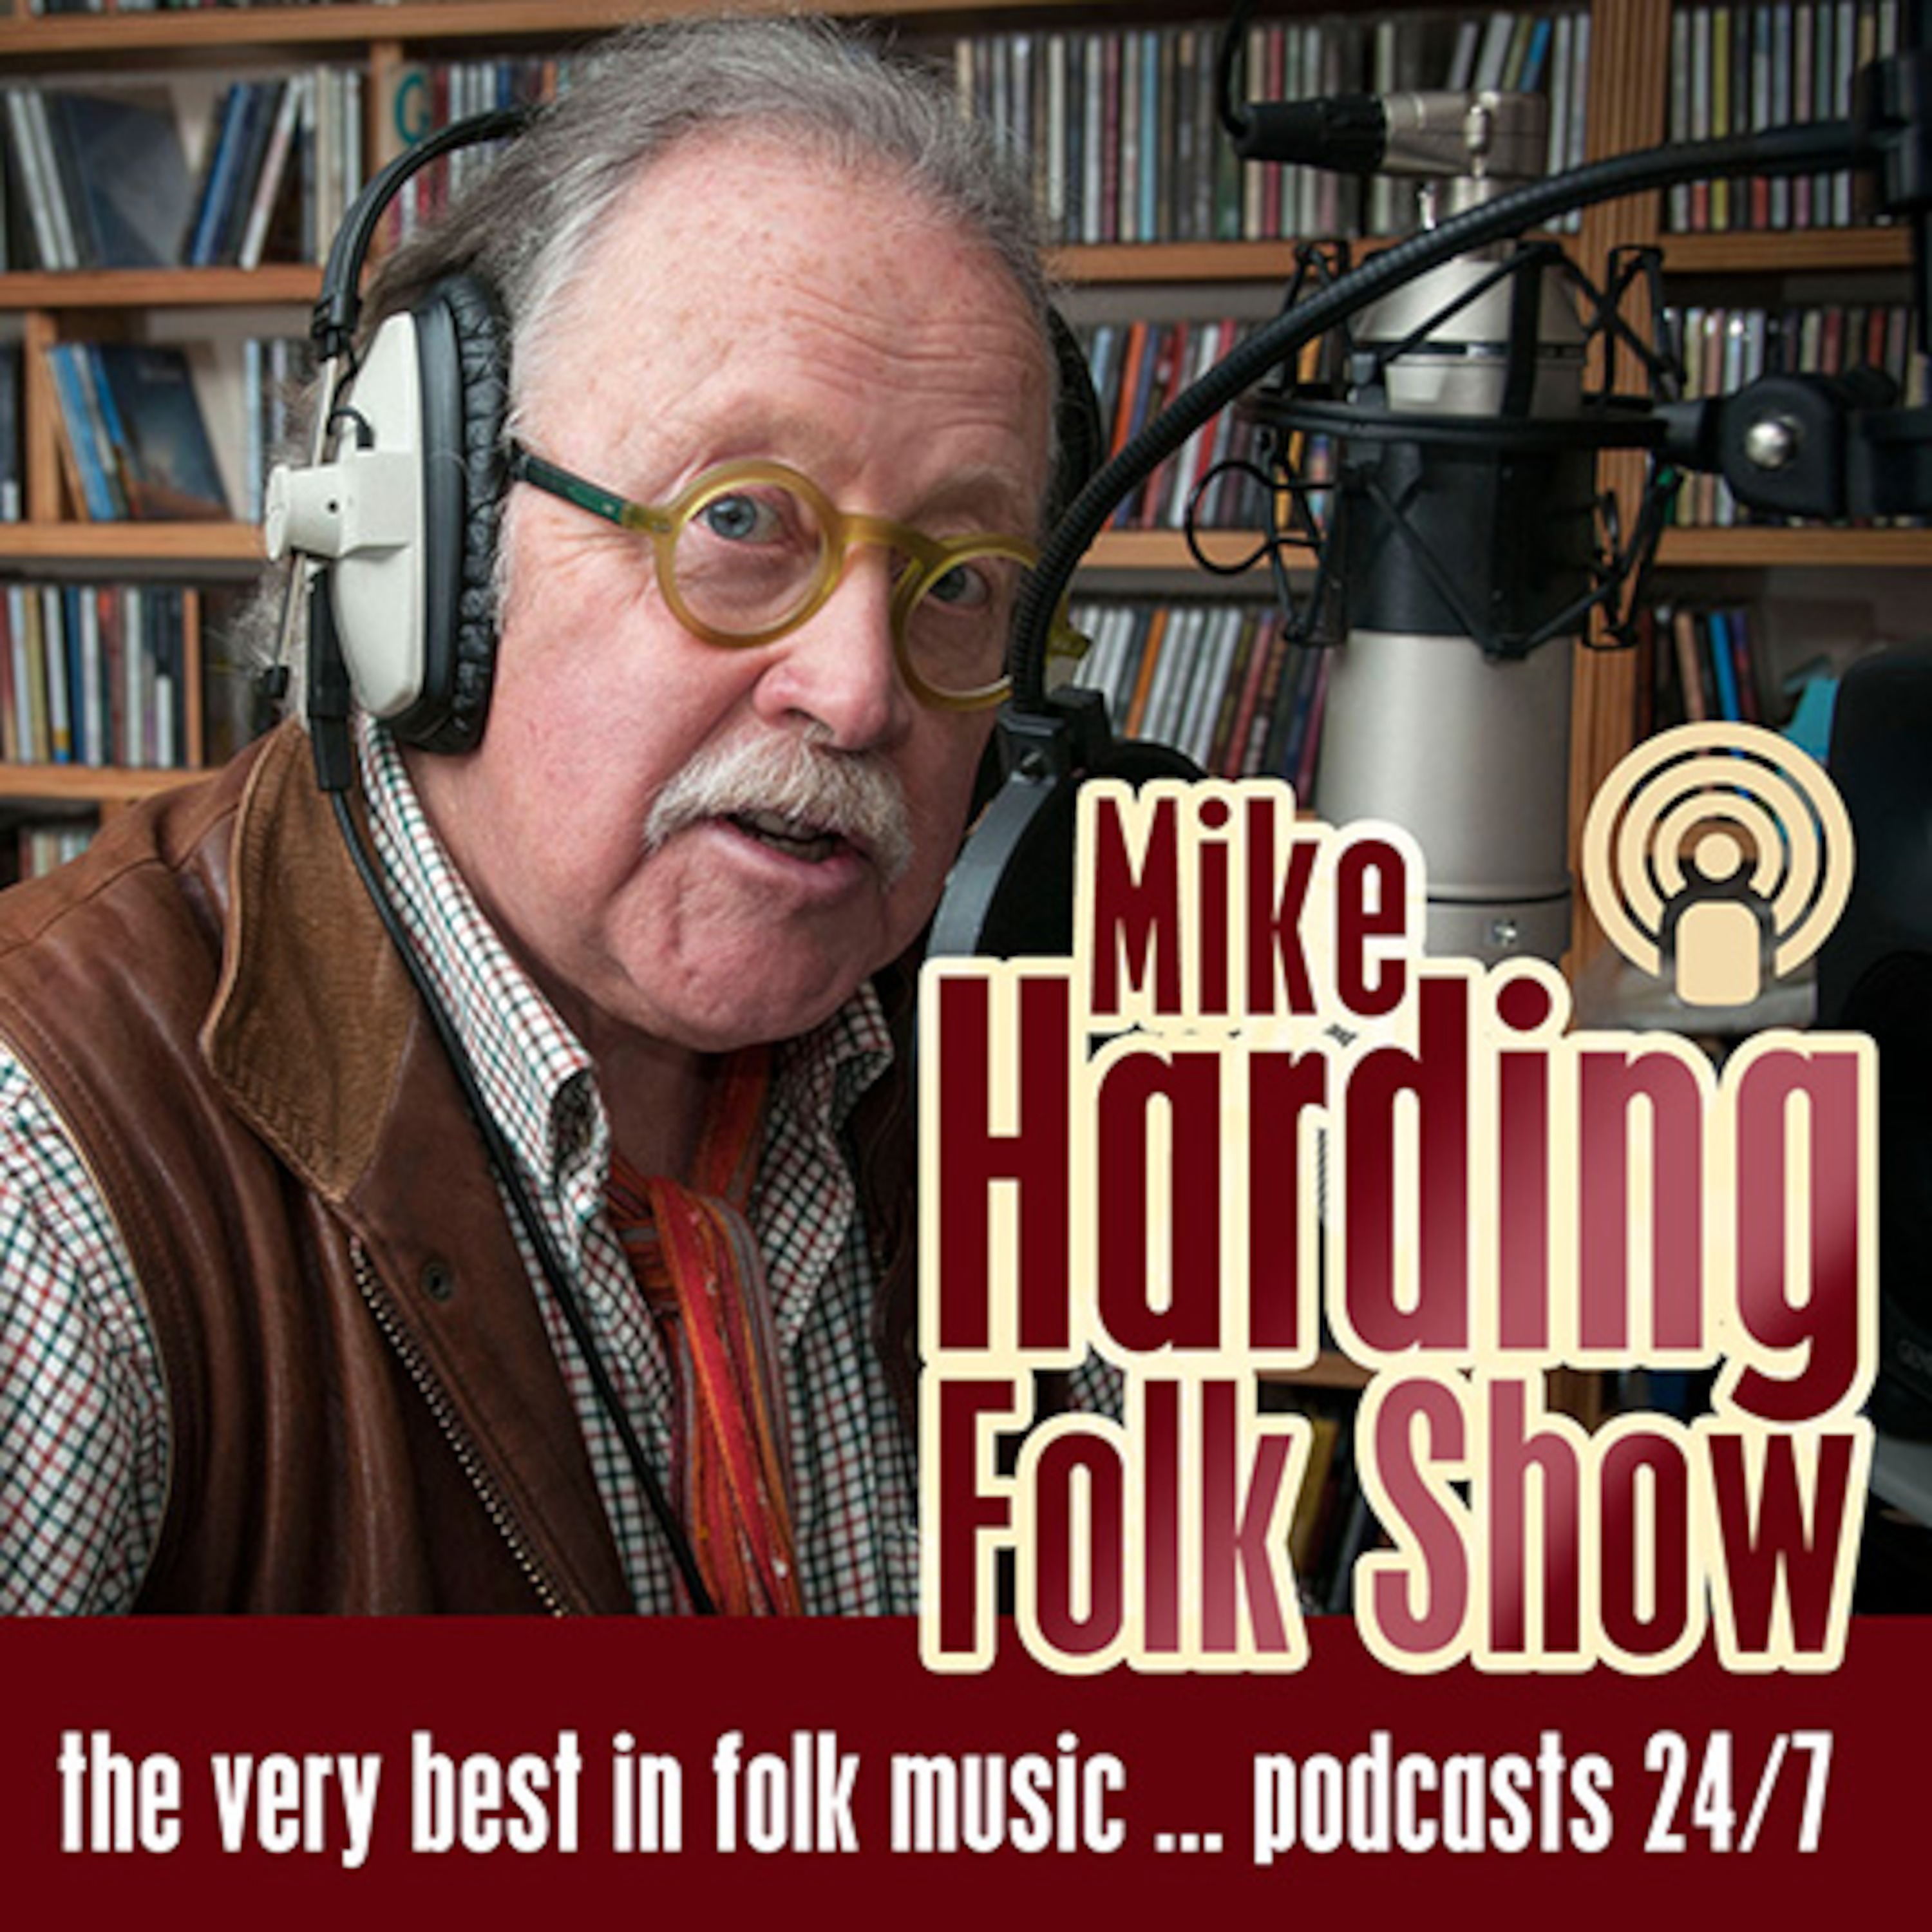 Mike Harding Folk Show 125